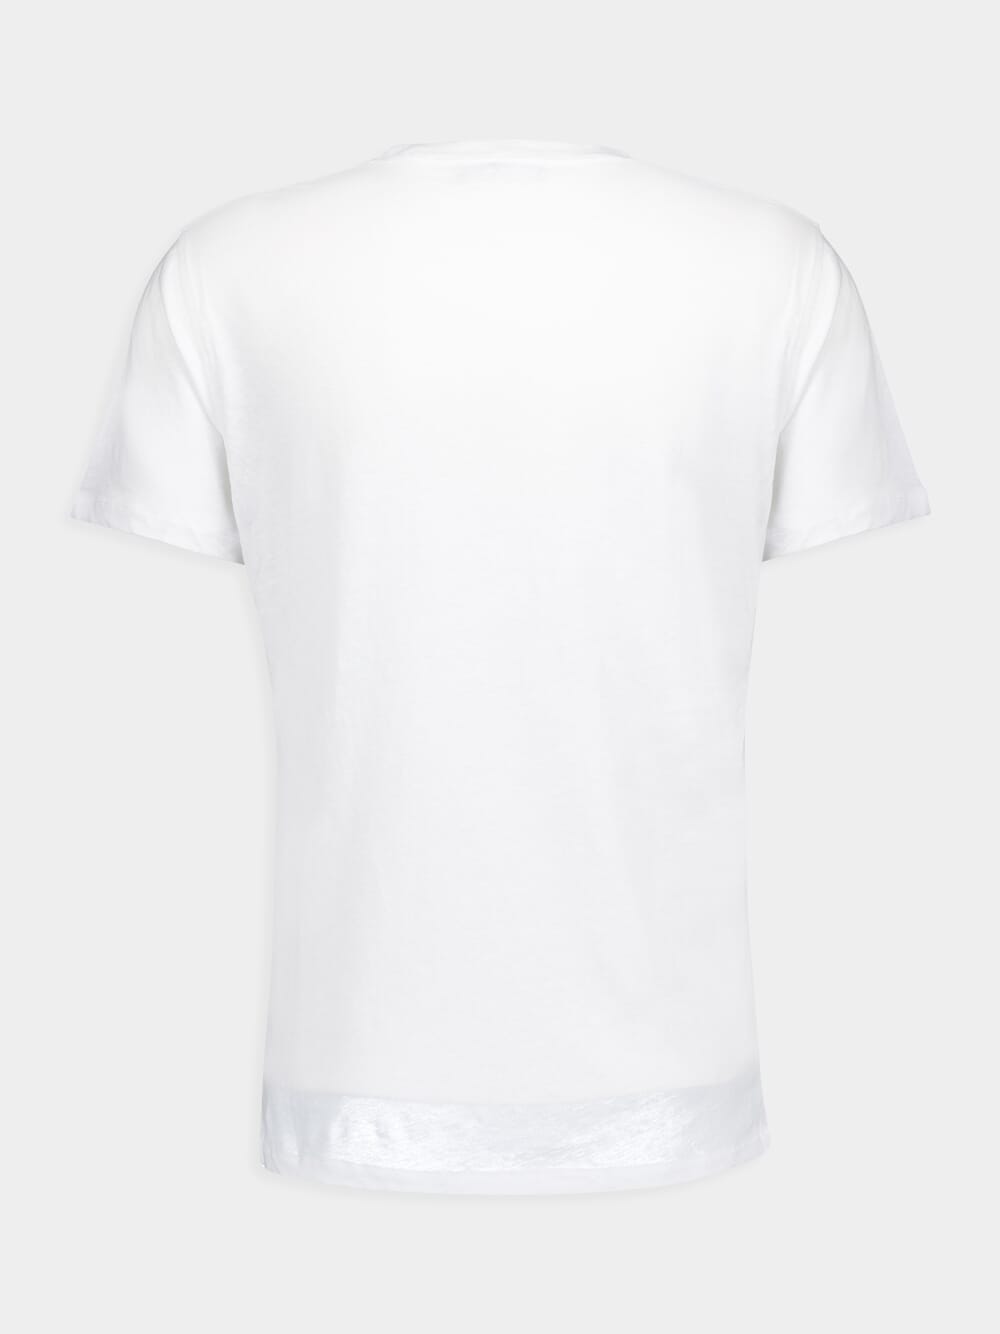 Lucio T-Shirt